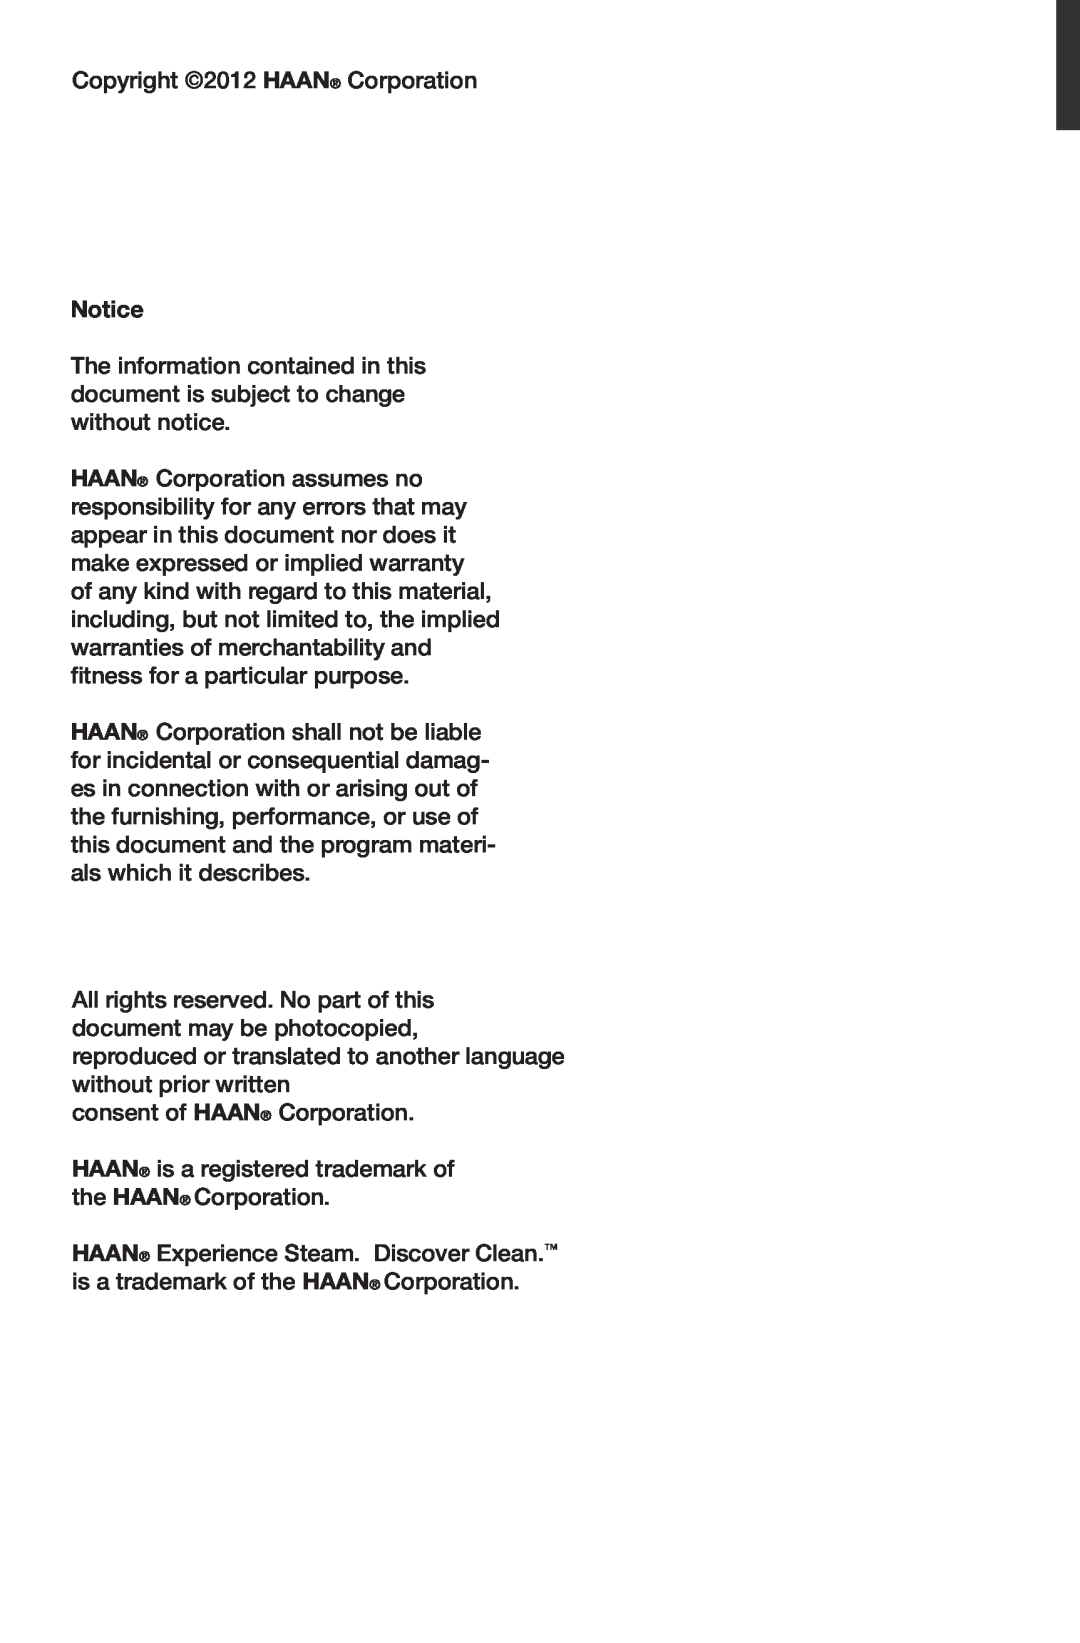 Haan SI-75 instruction manual Copyright 2012 HAAN Corporation, consent of HAAN Corporation 